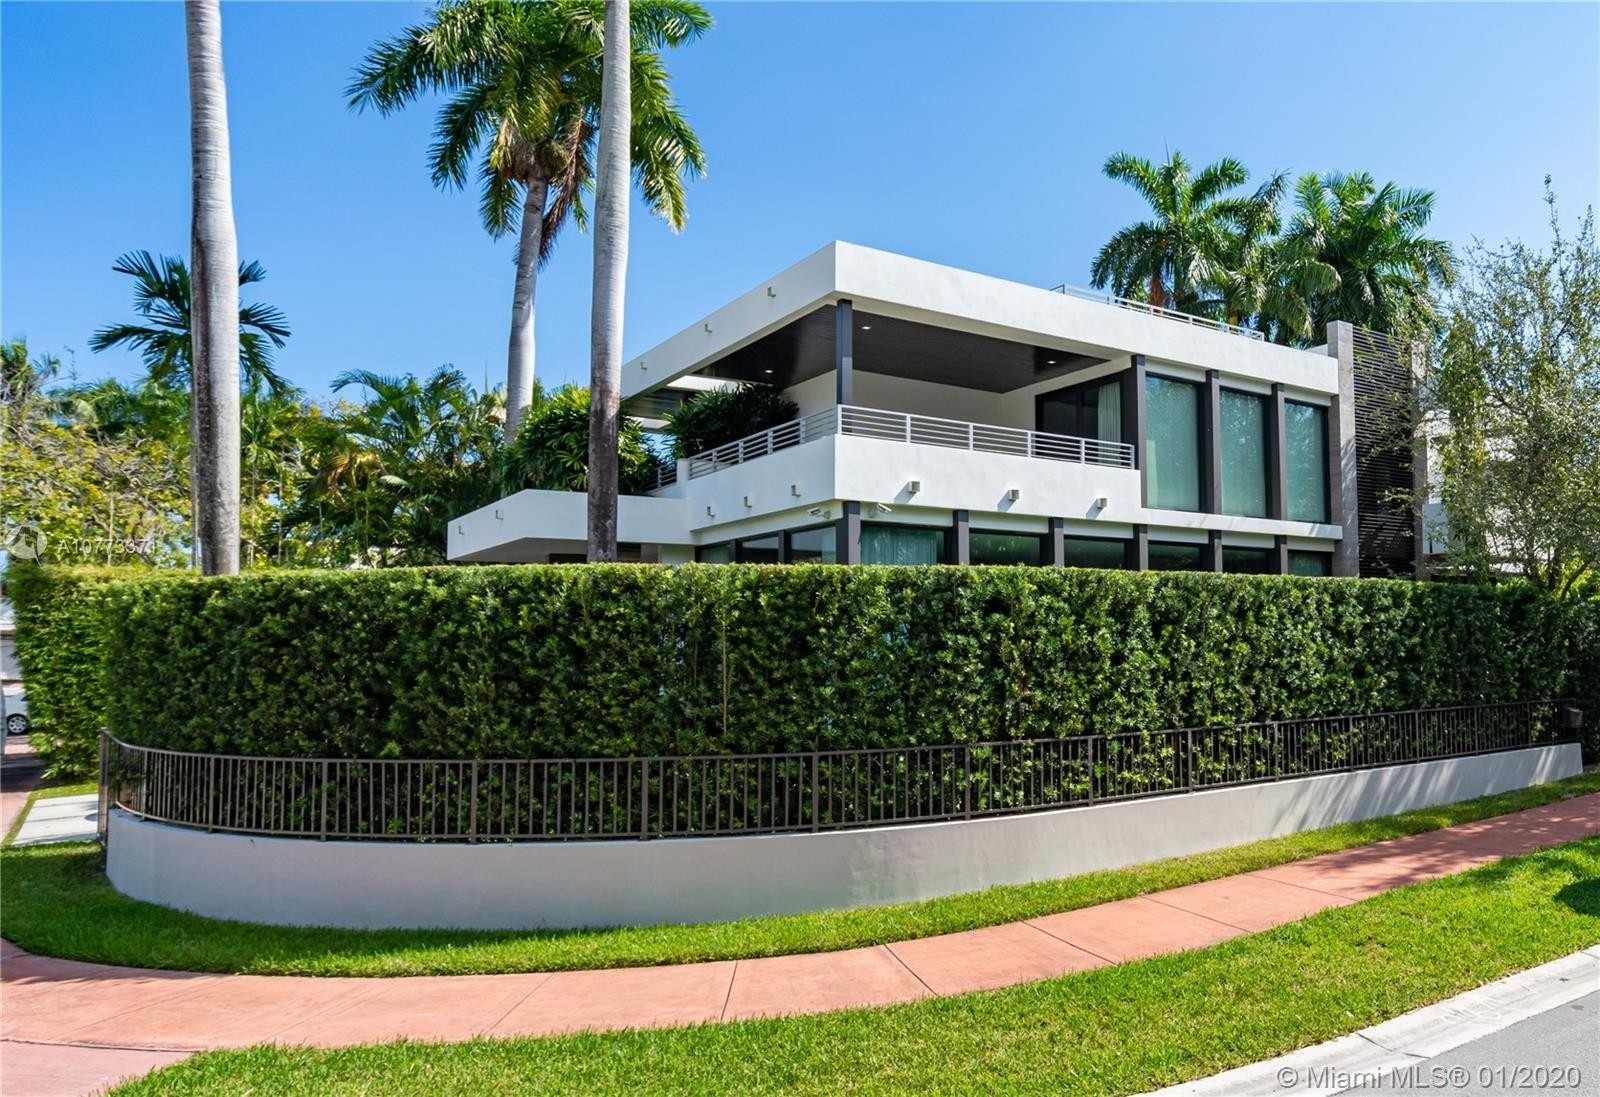 Single Family Home at Miami Beach